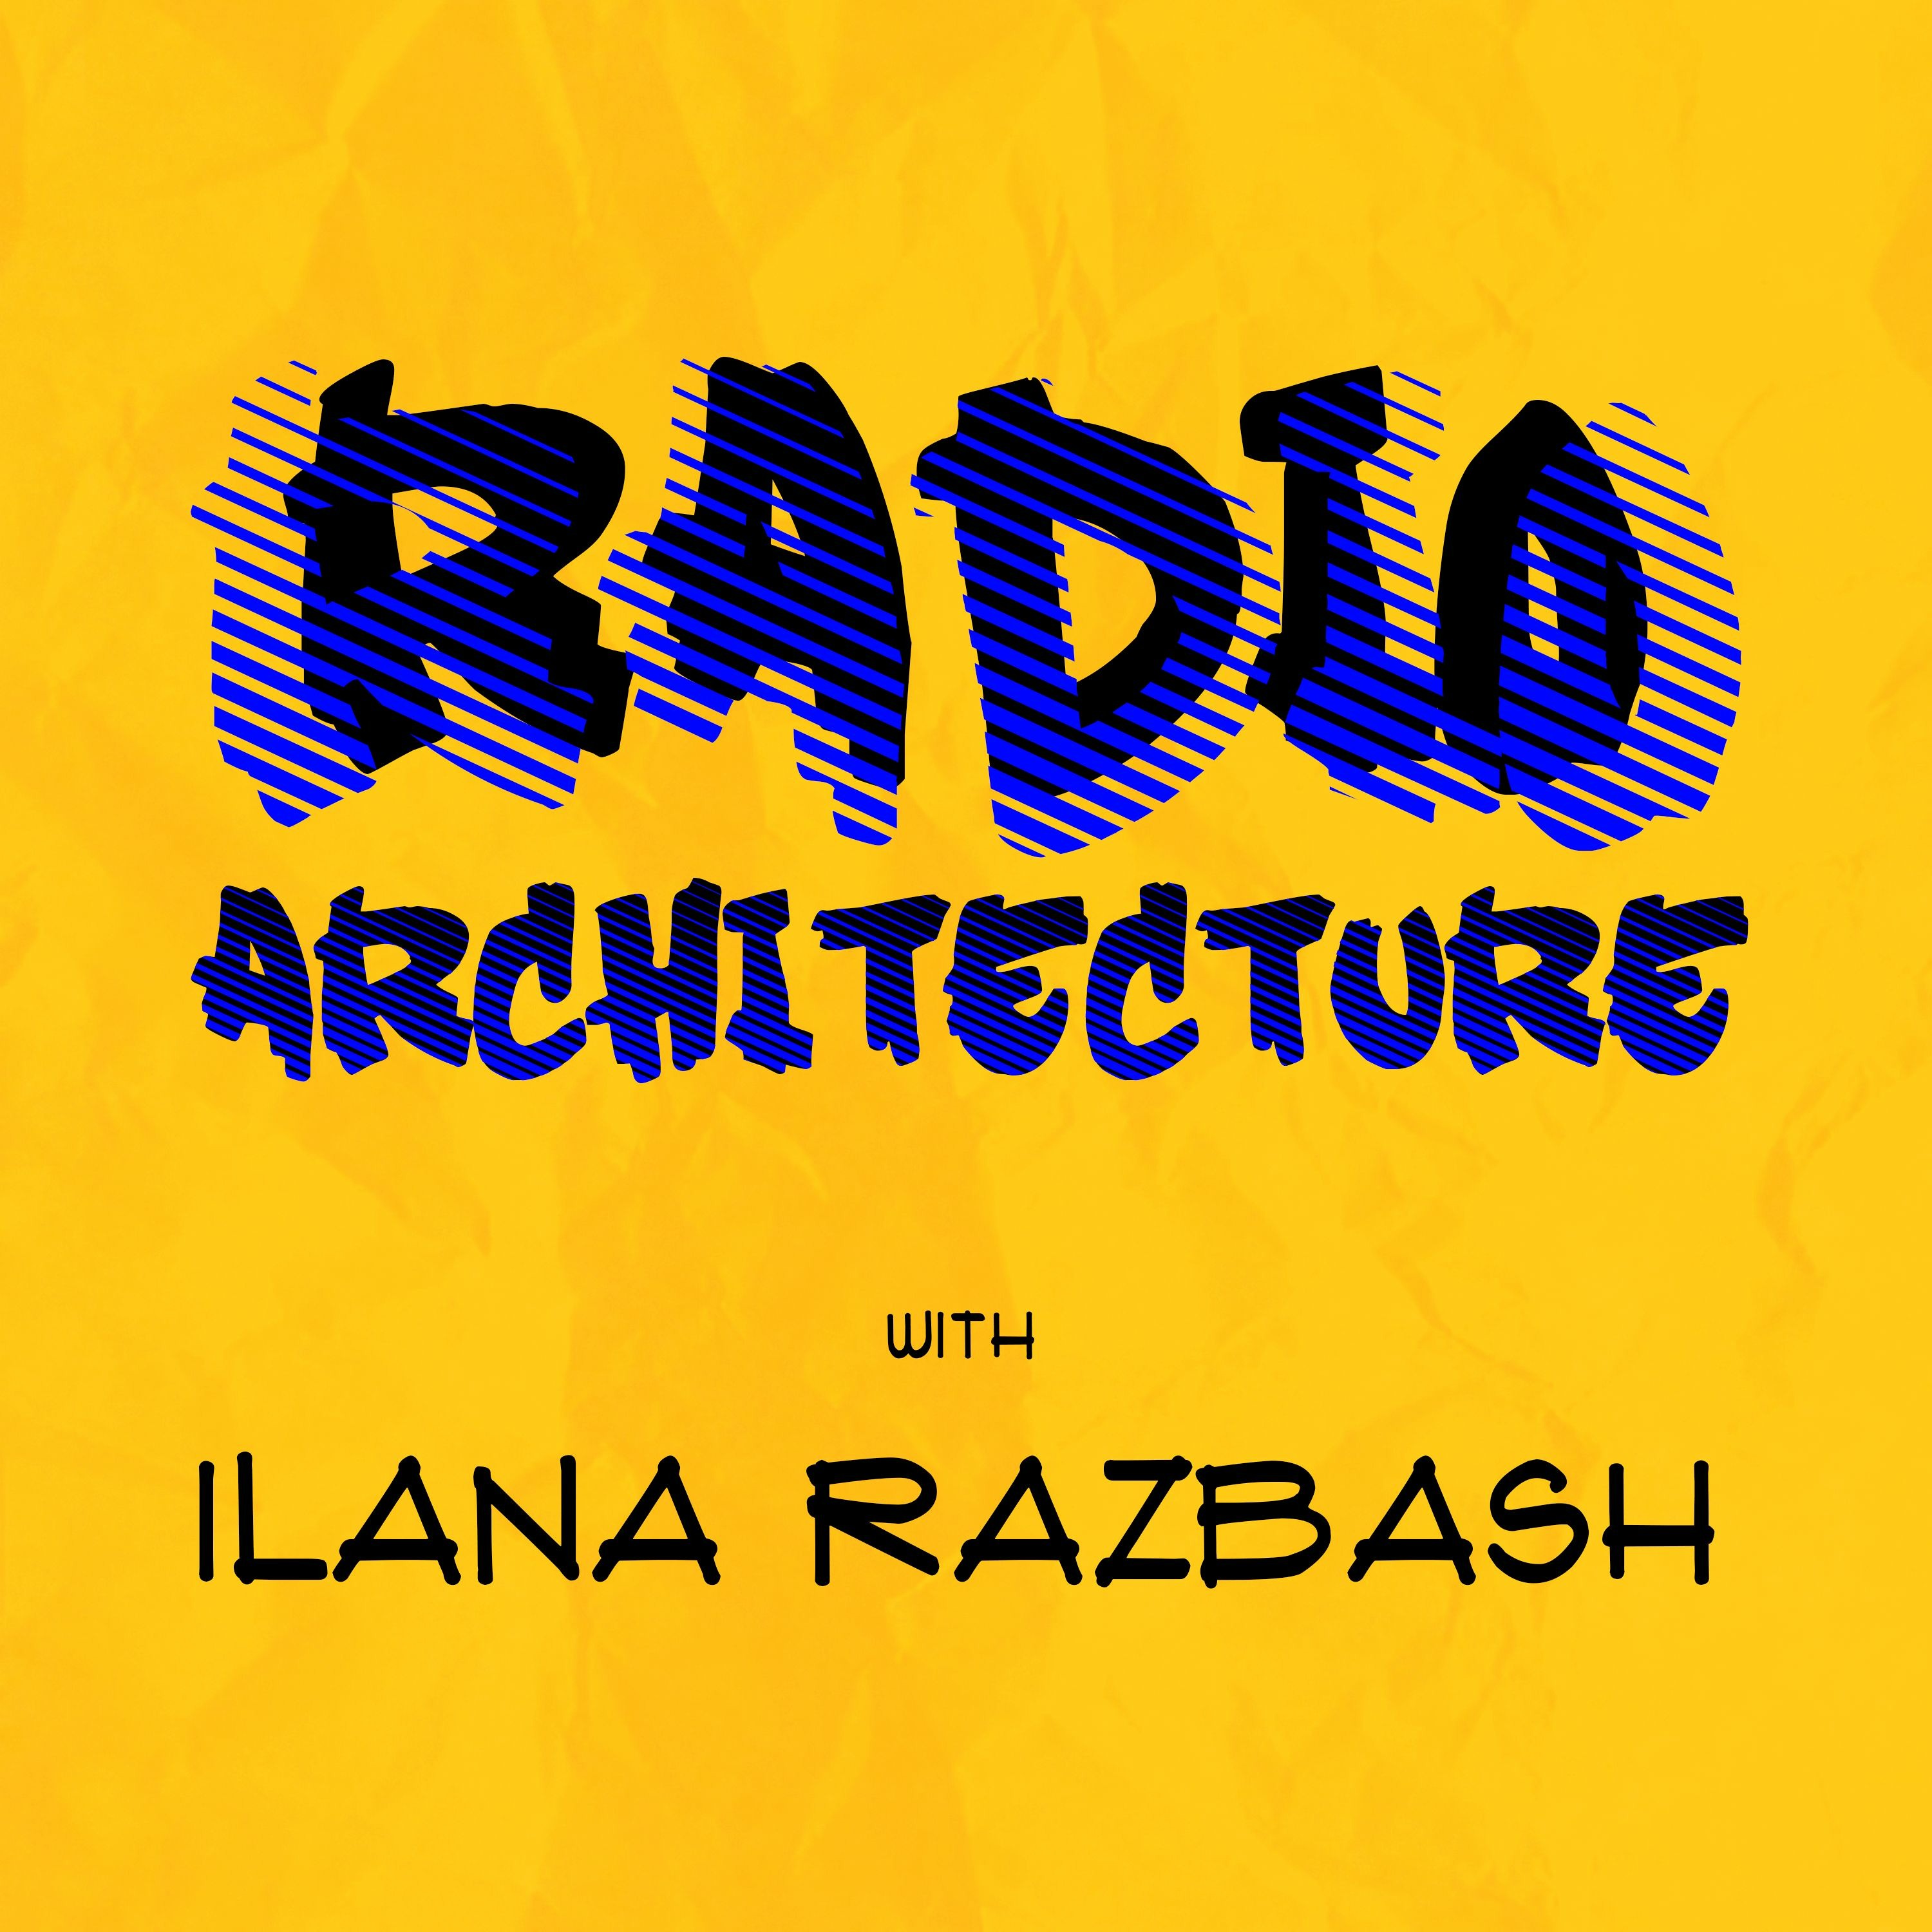 Radio Architecture With Ilana Razbash - Episode 29 (Amy Muir)